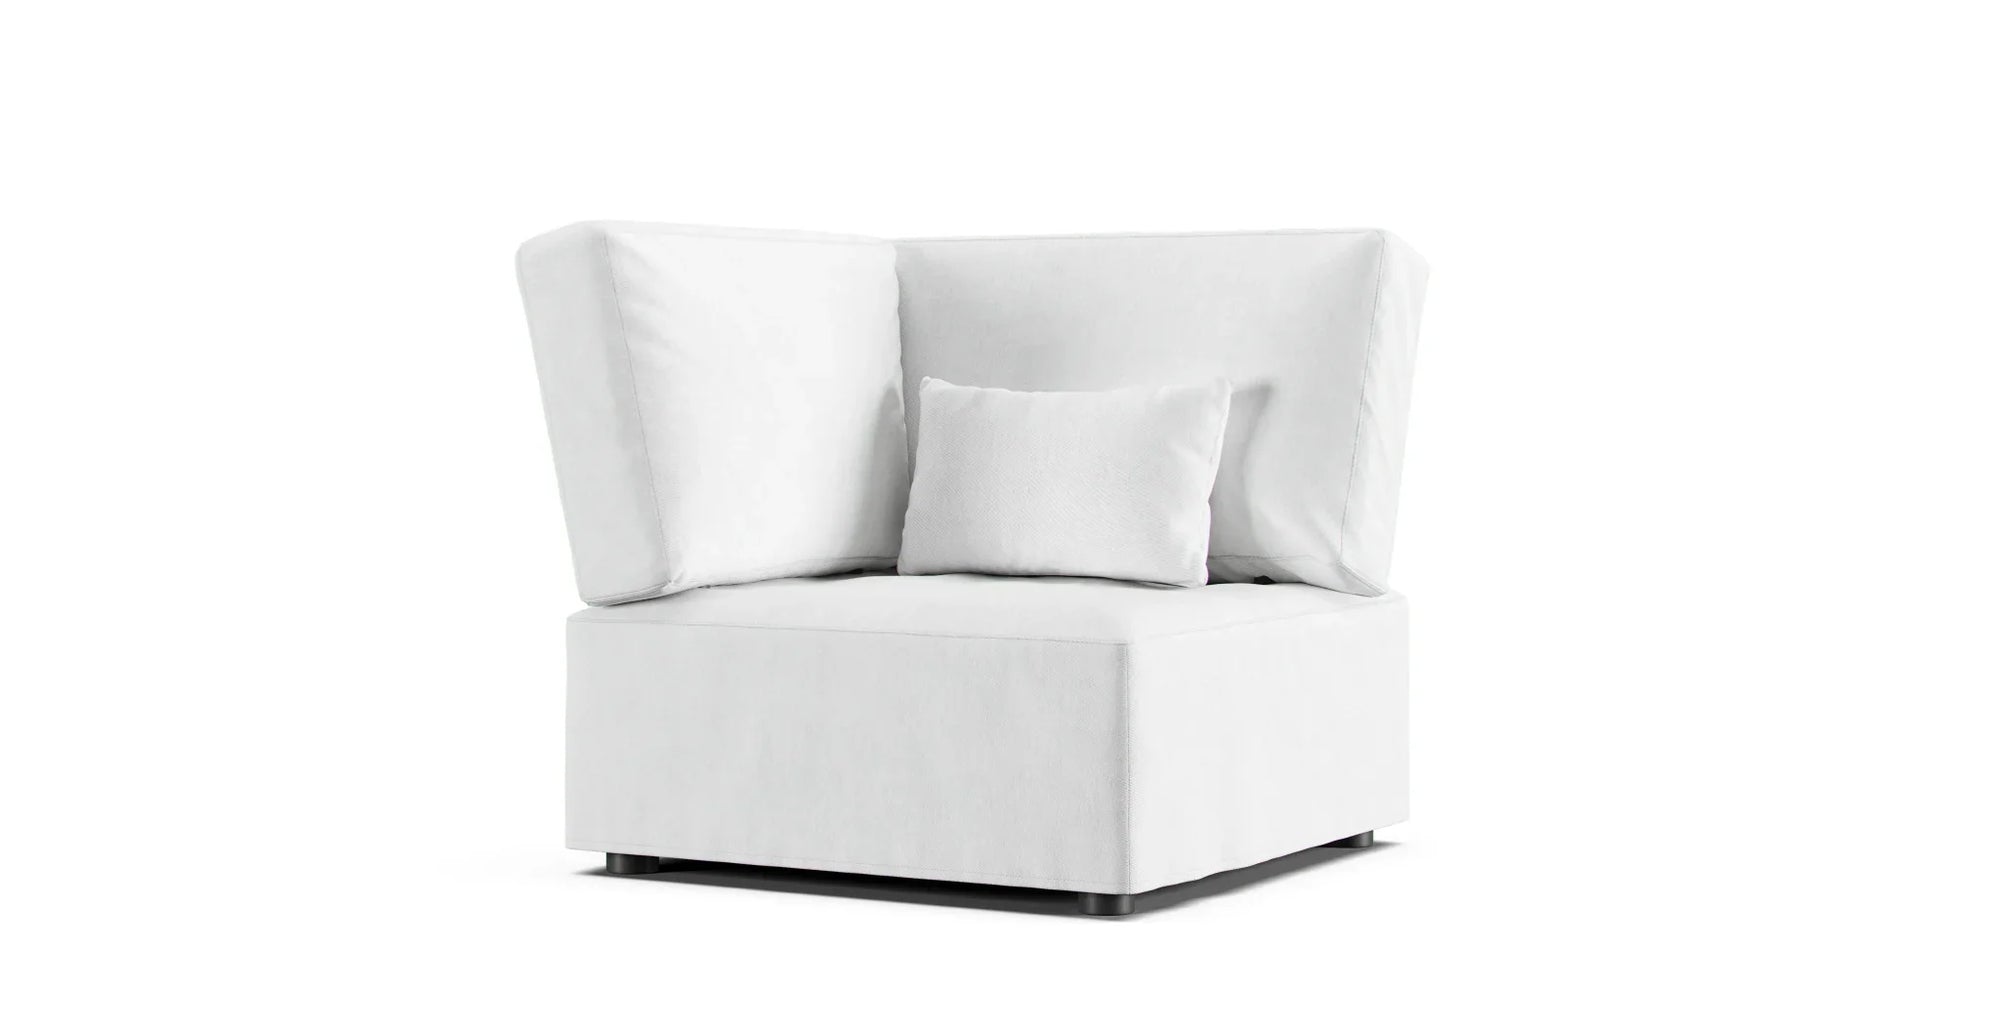 Habitat Reiko Left Right Corner Chair Unit featuring white Cotton Canvas slipcovers